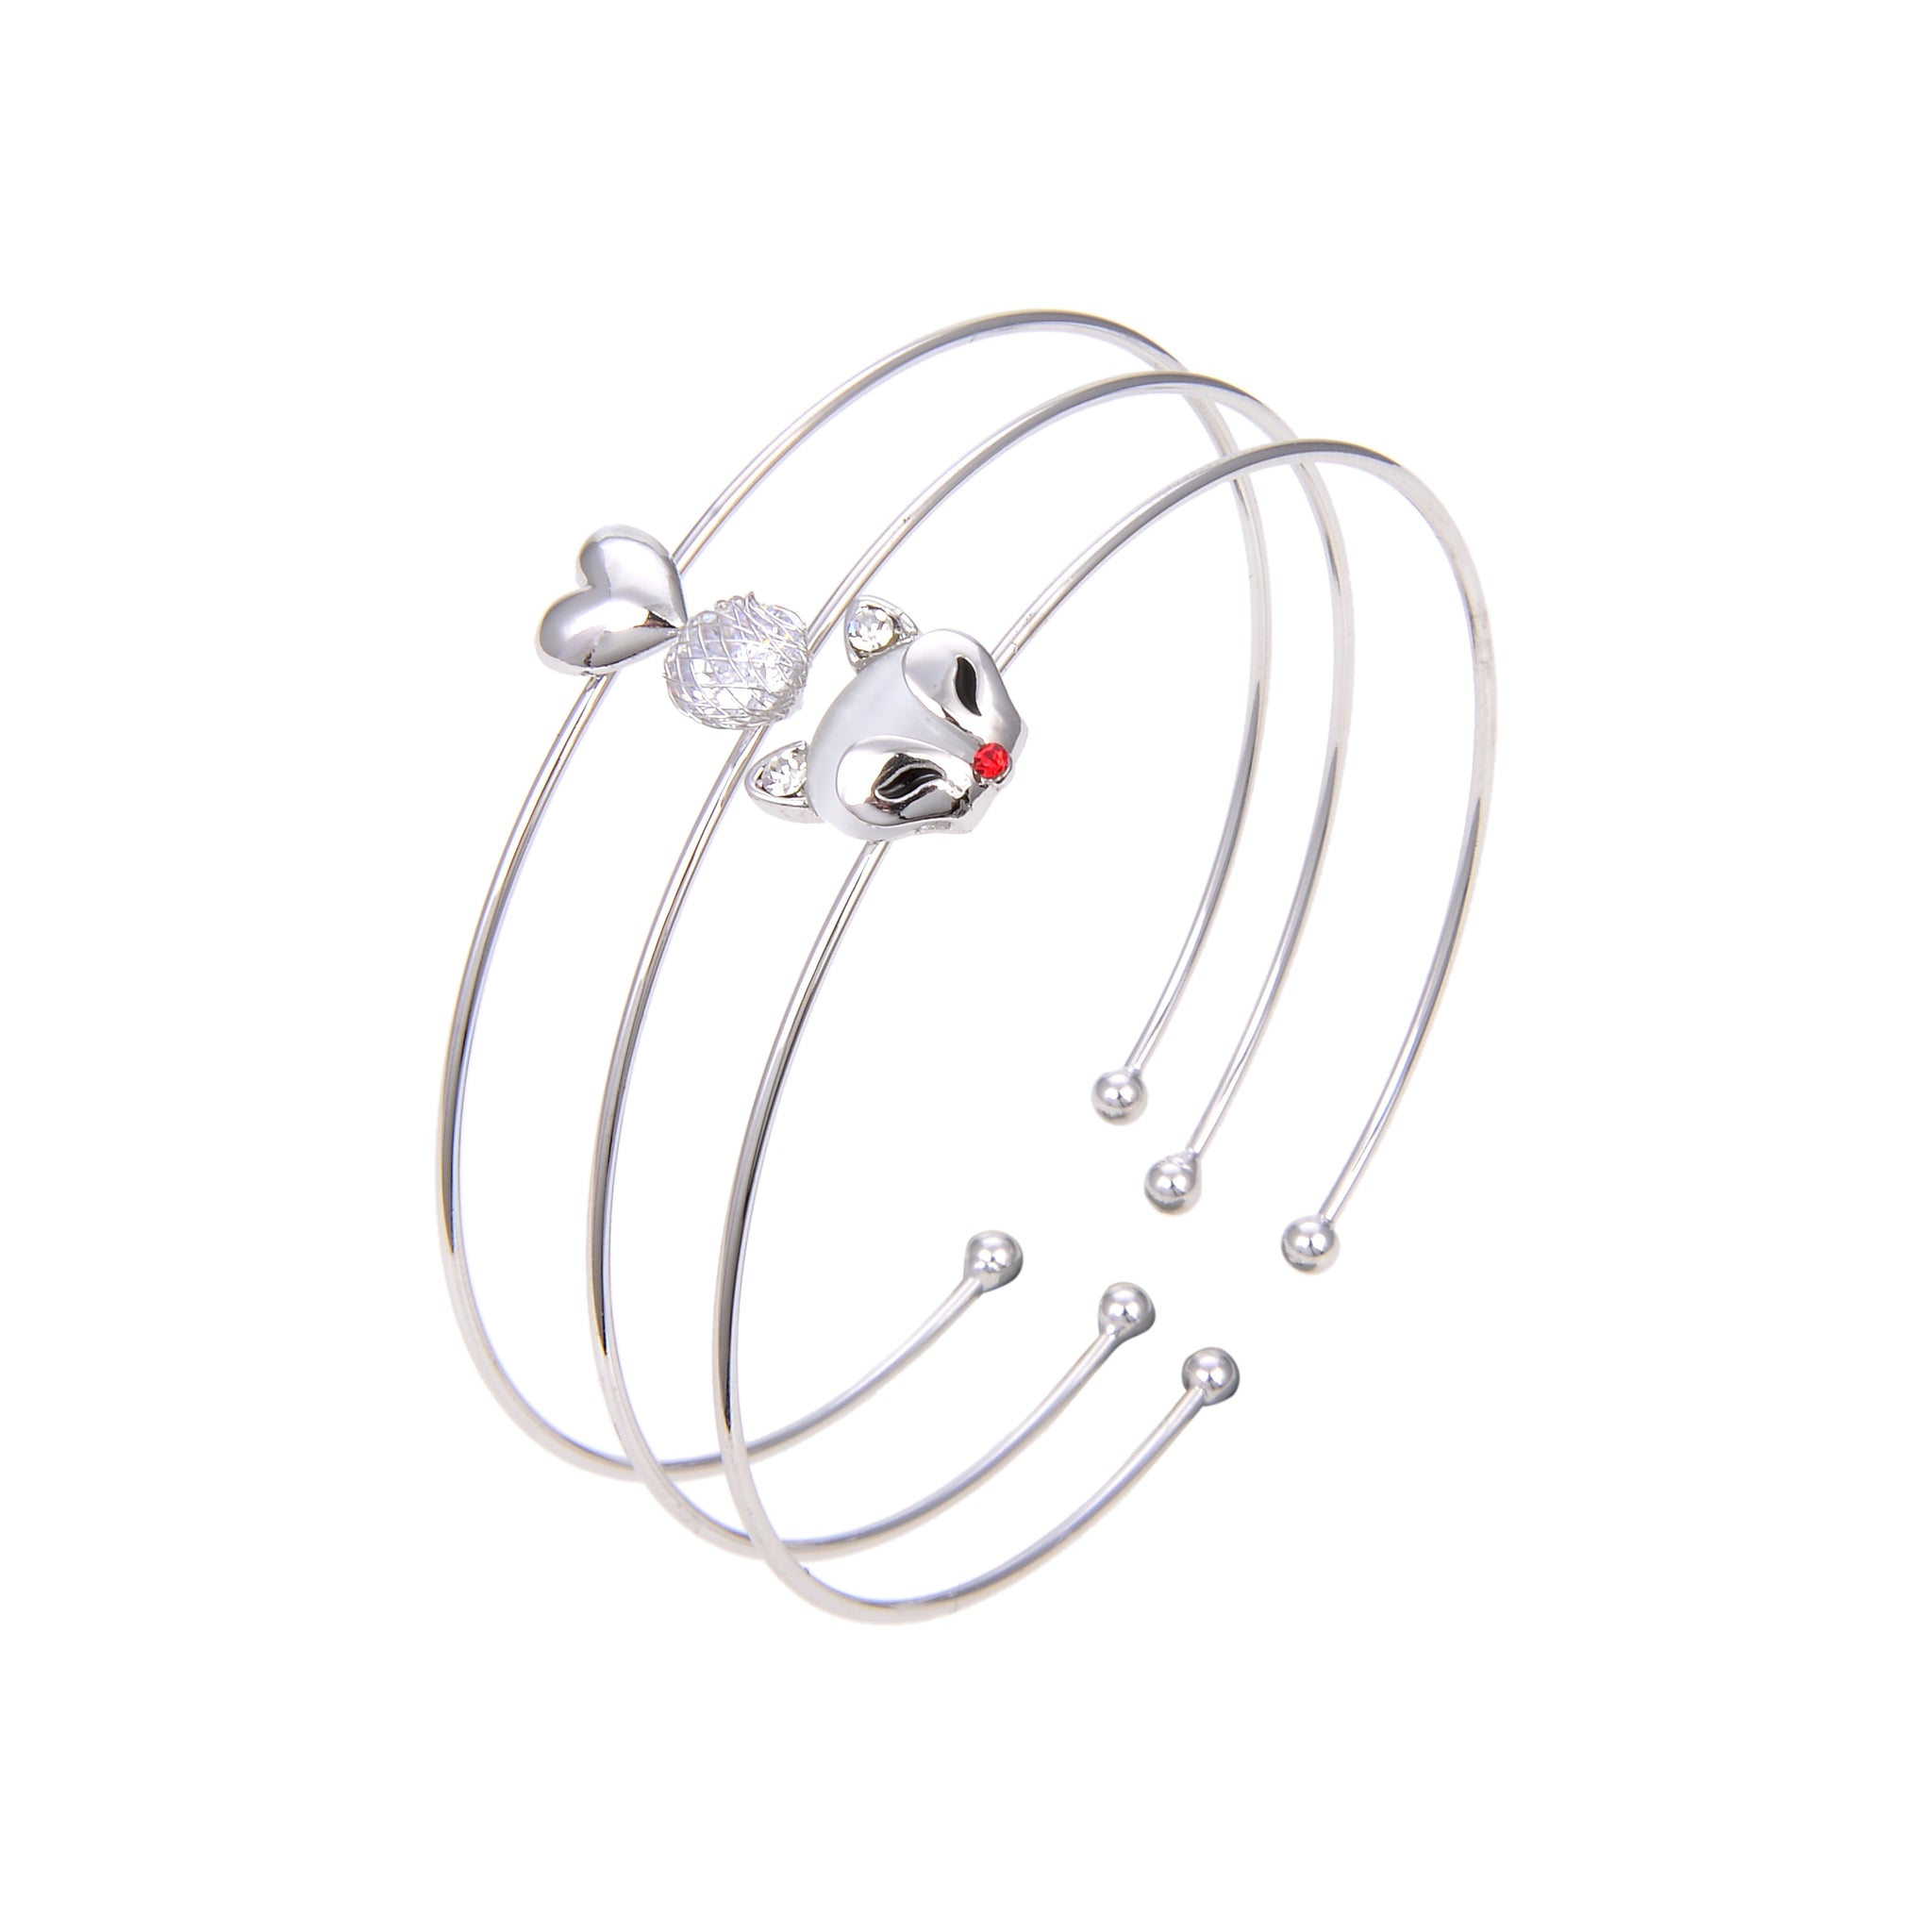 Silver Plated Cubic Zirconia Bangle Bracelet, CZ Adjustable Bangle Bracelet